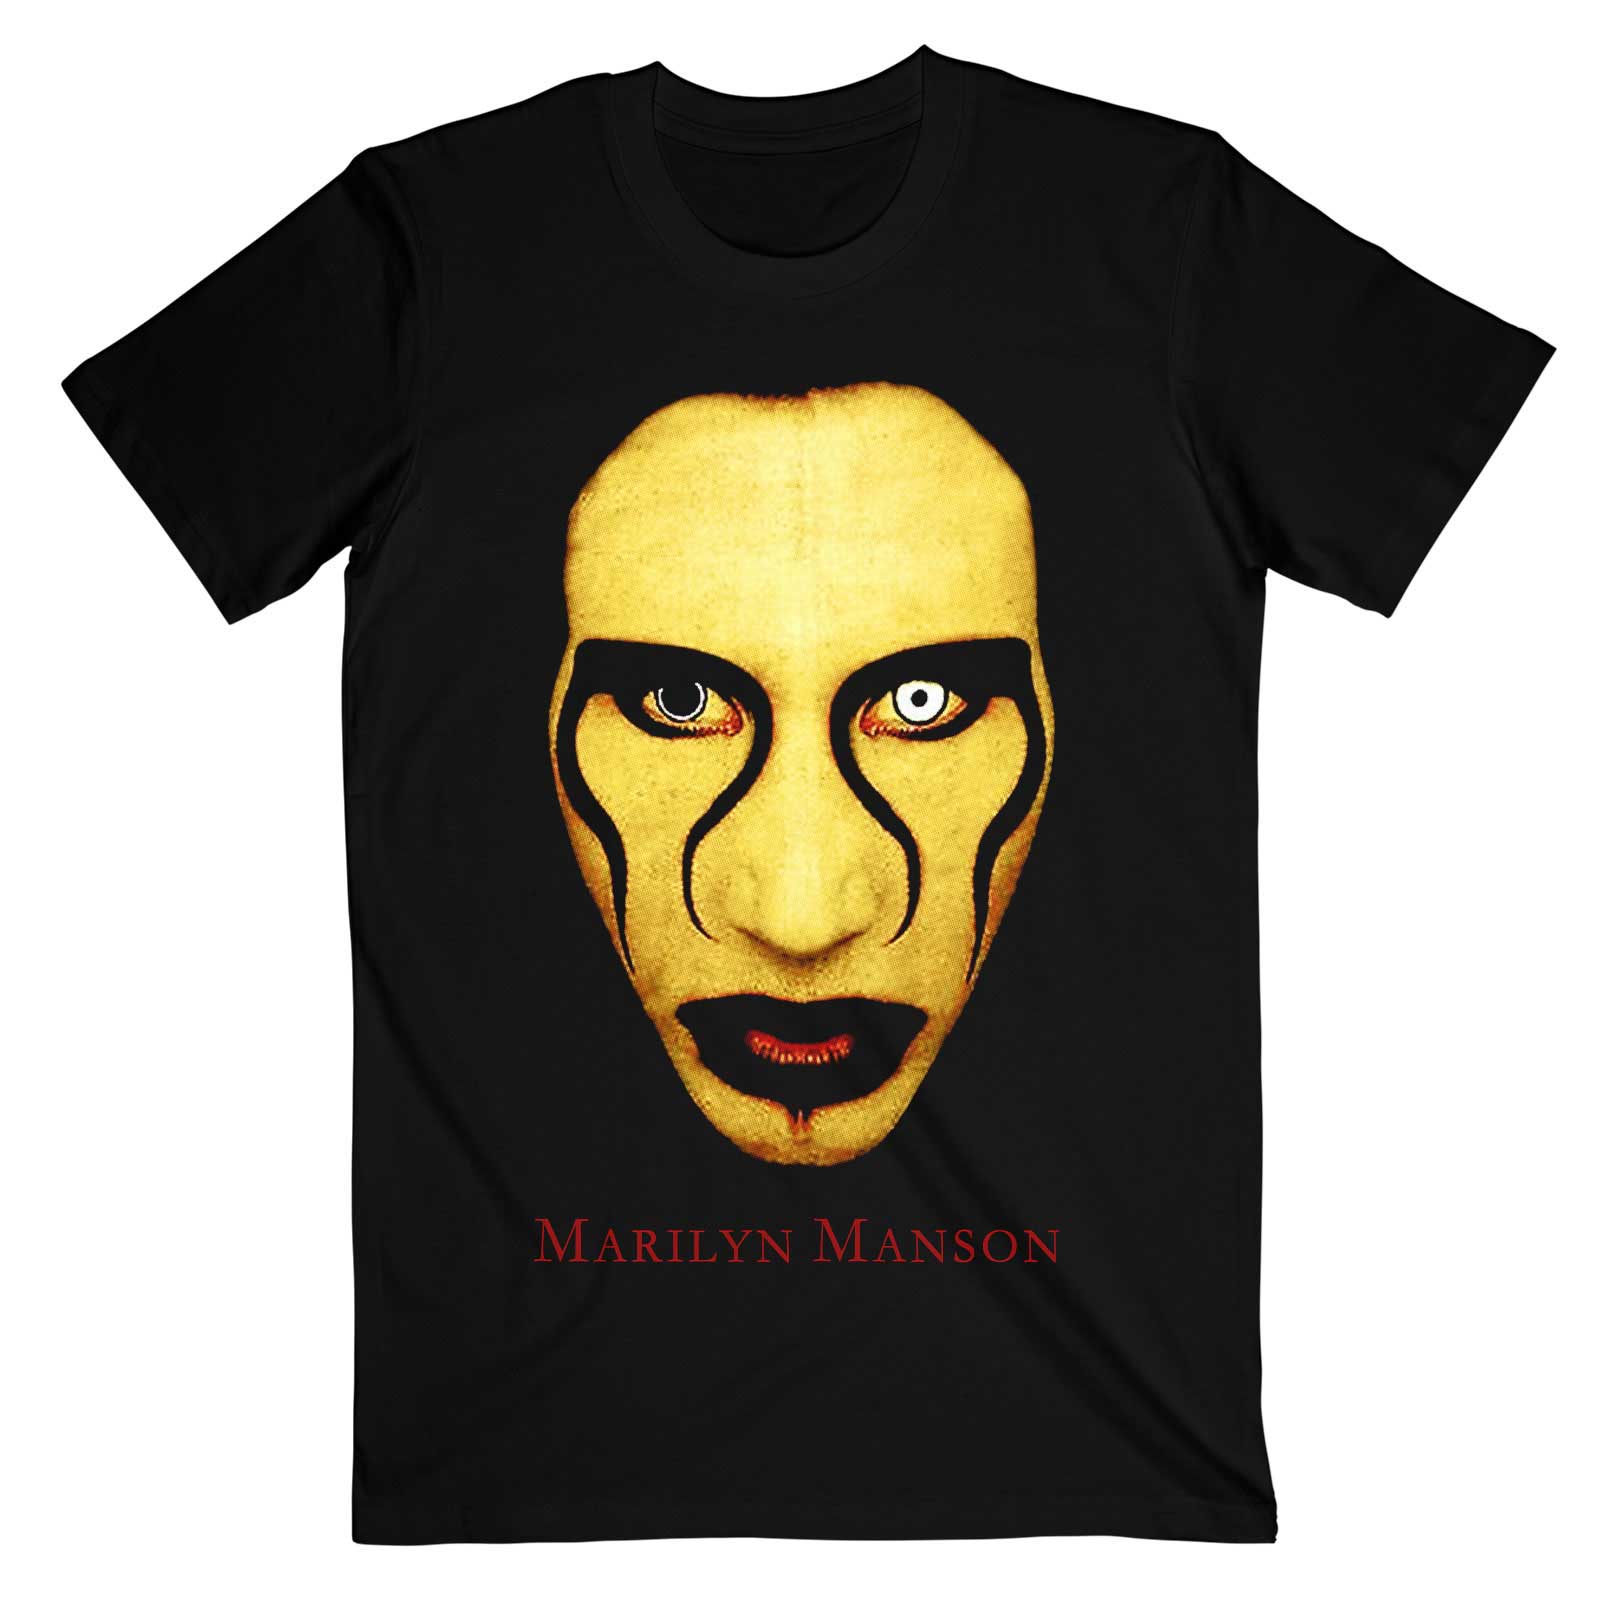 Marilyn Manson Unisex T-Shirt: Sex is Dead